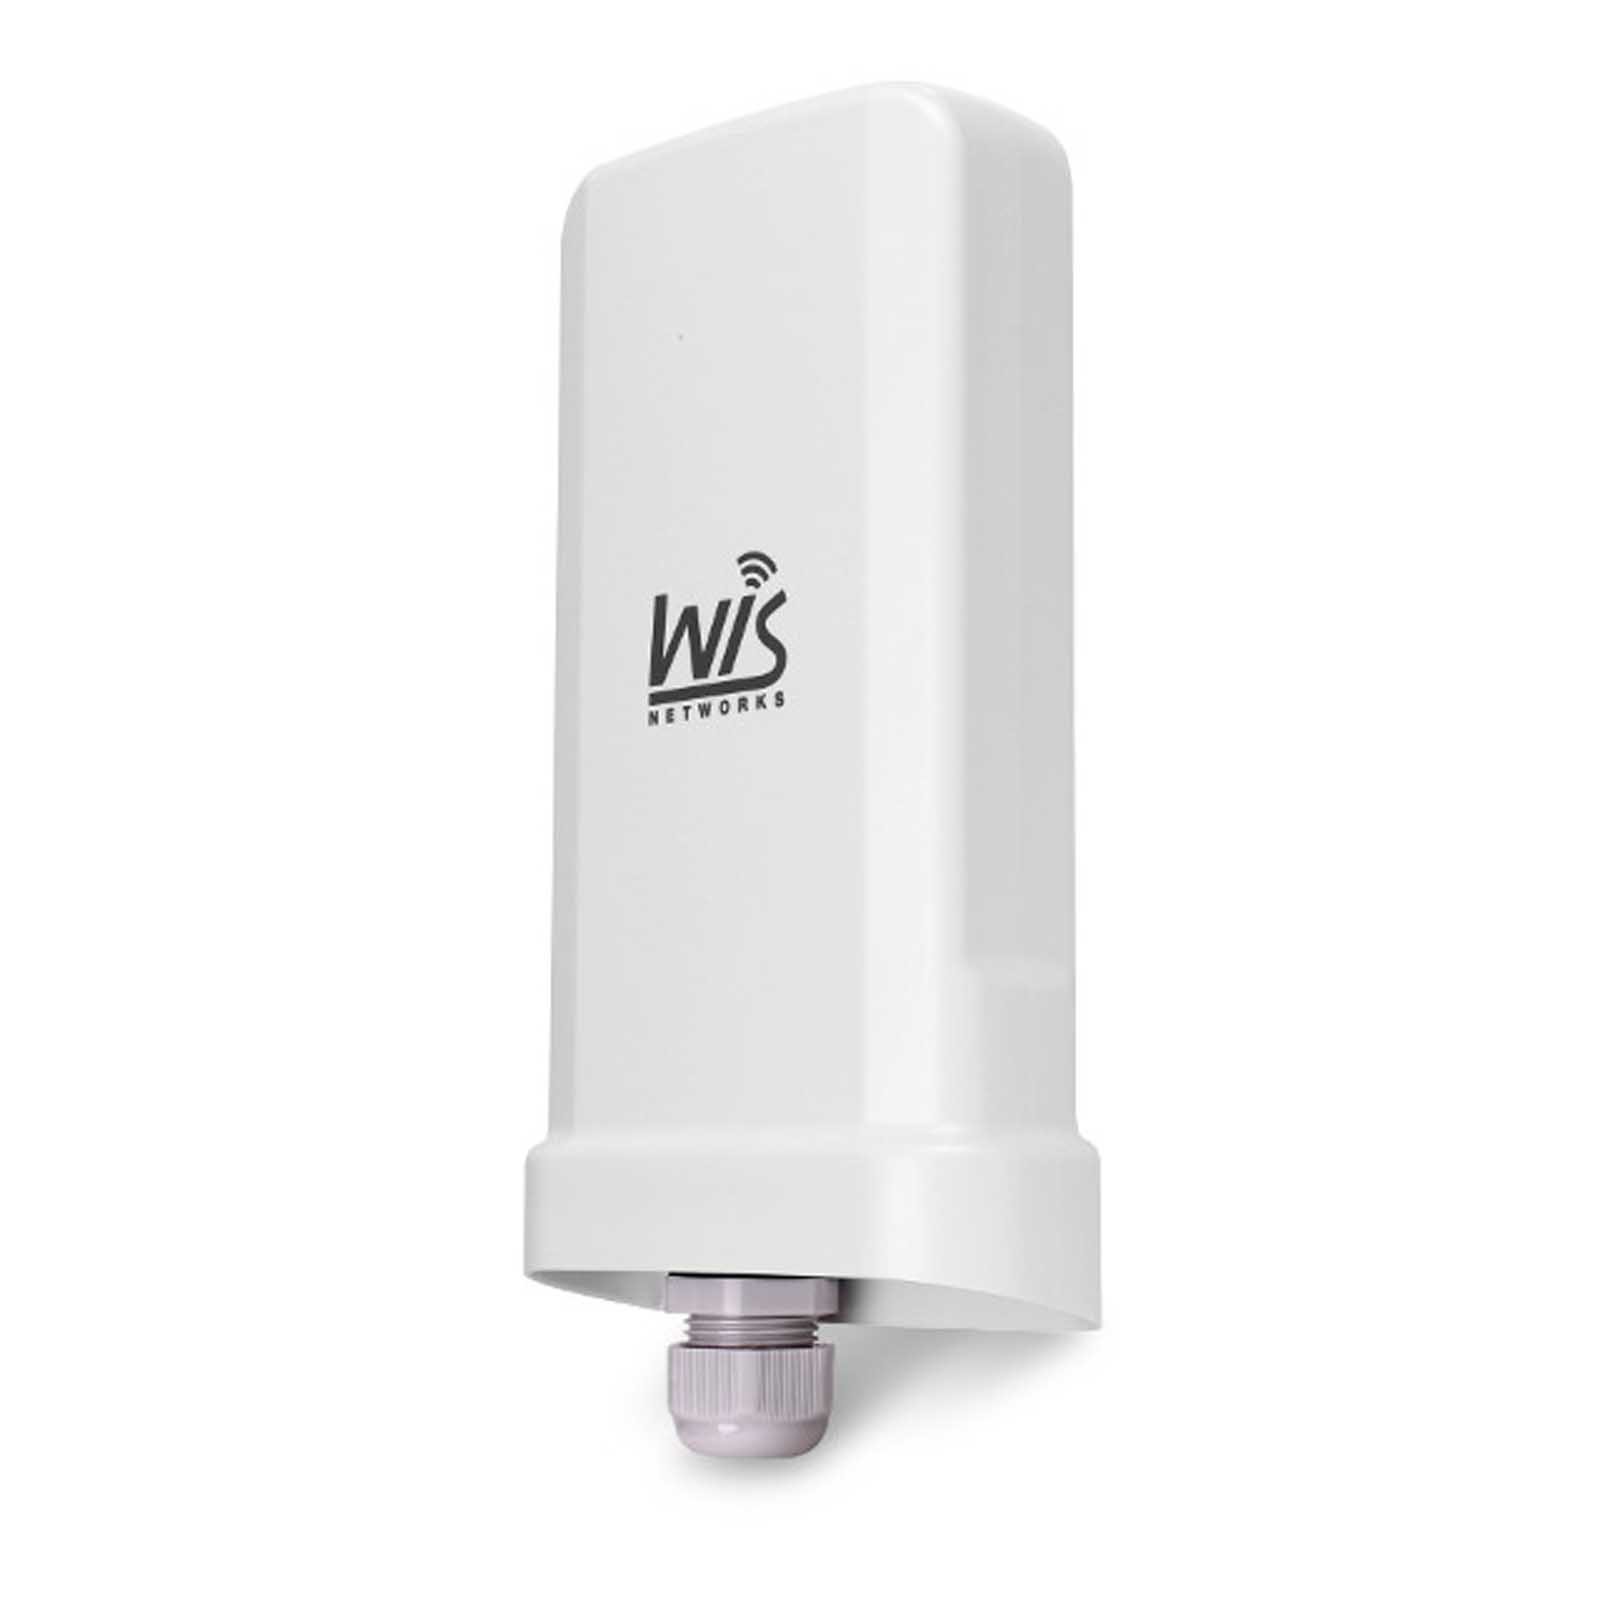 Wisnetworks WIS-Q2300L Hi-Gain Wireless CPE